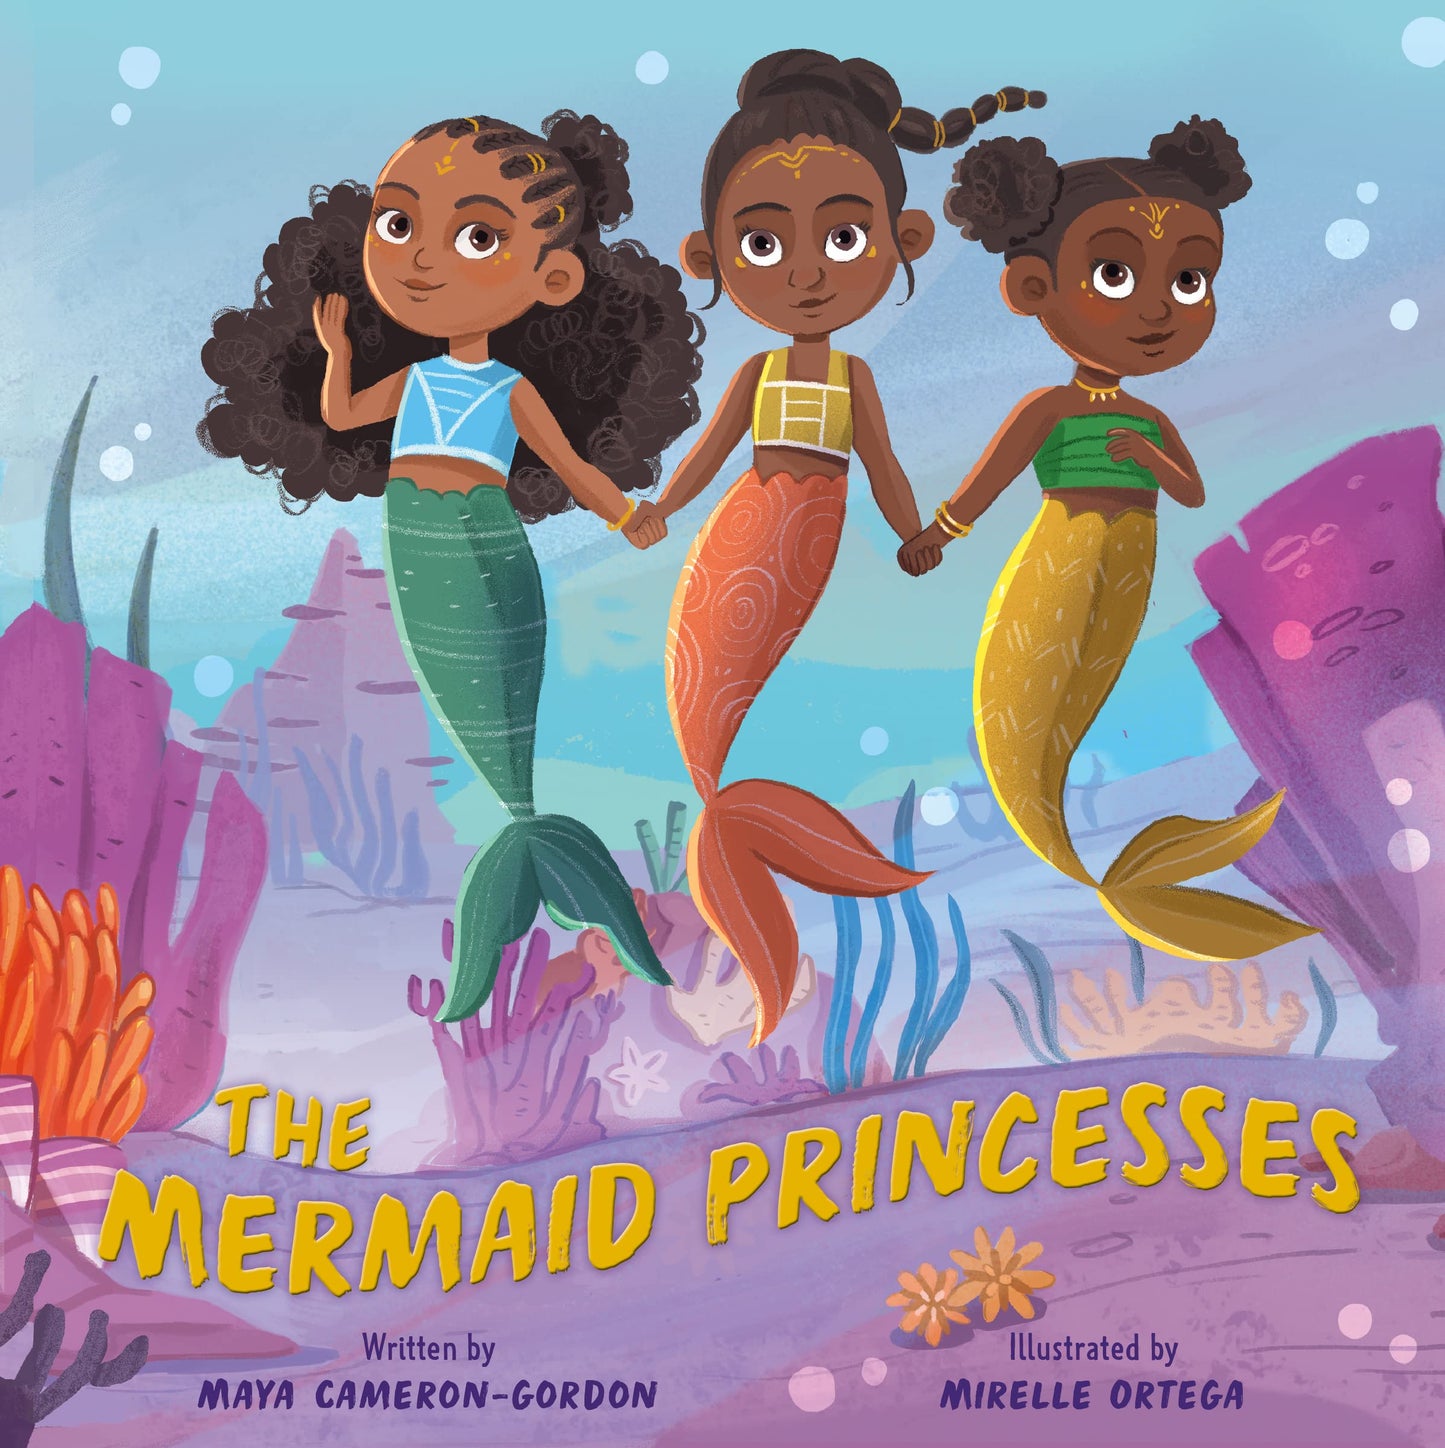 The Mermaid Princesses // A Sister Tale